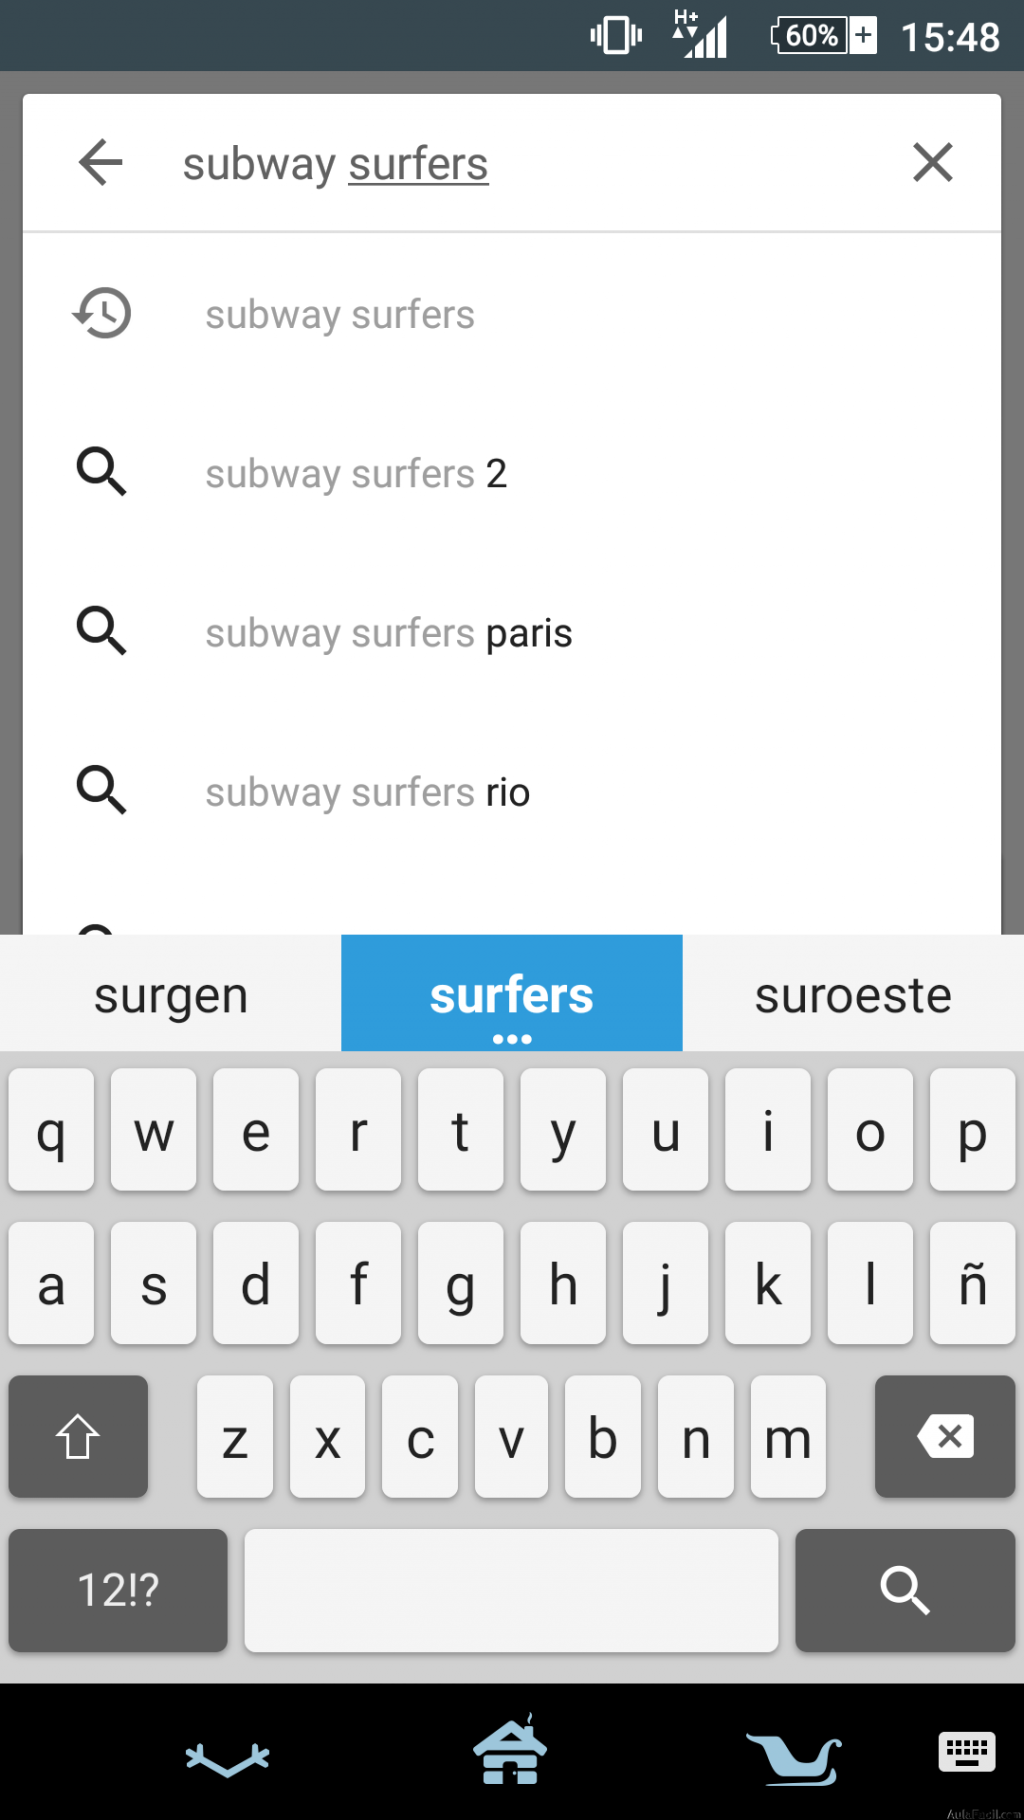 subway surfer 1